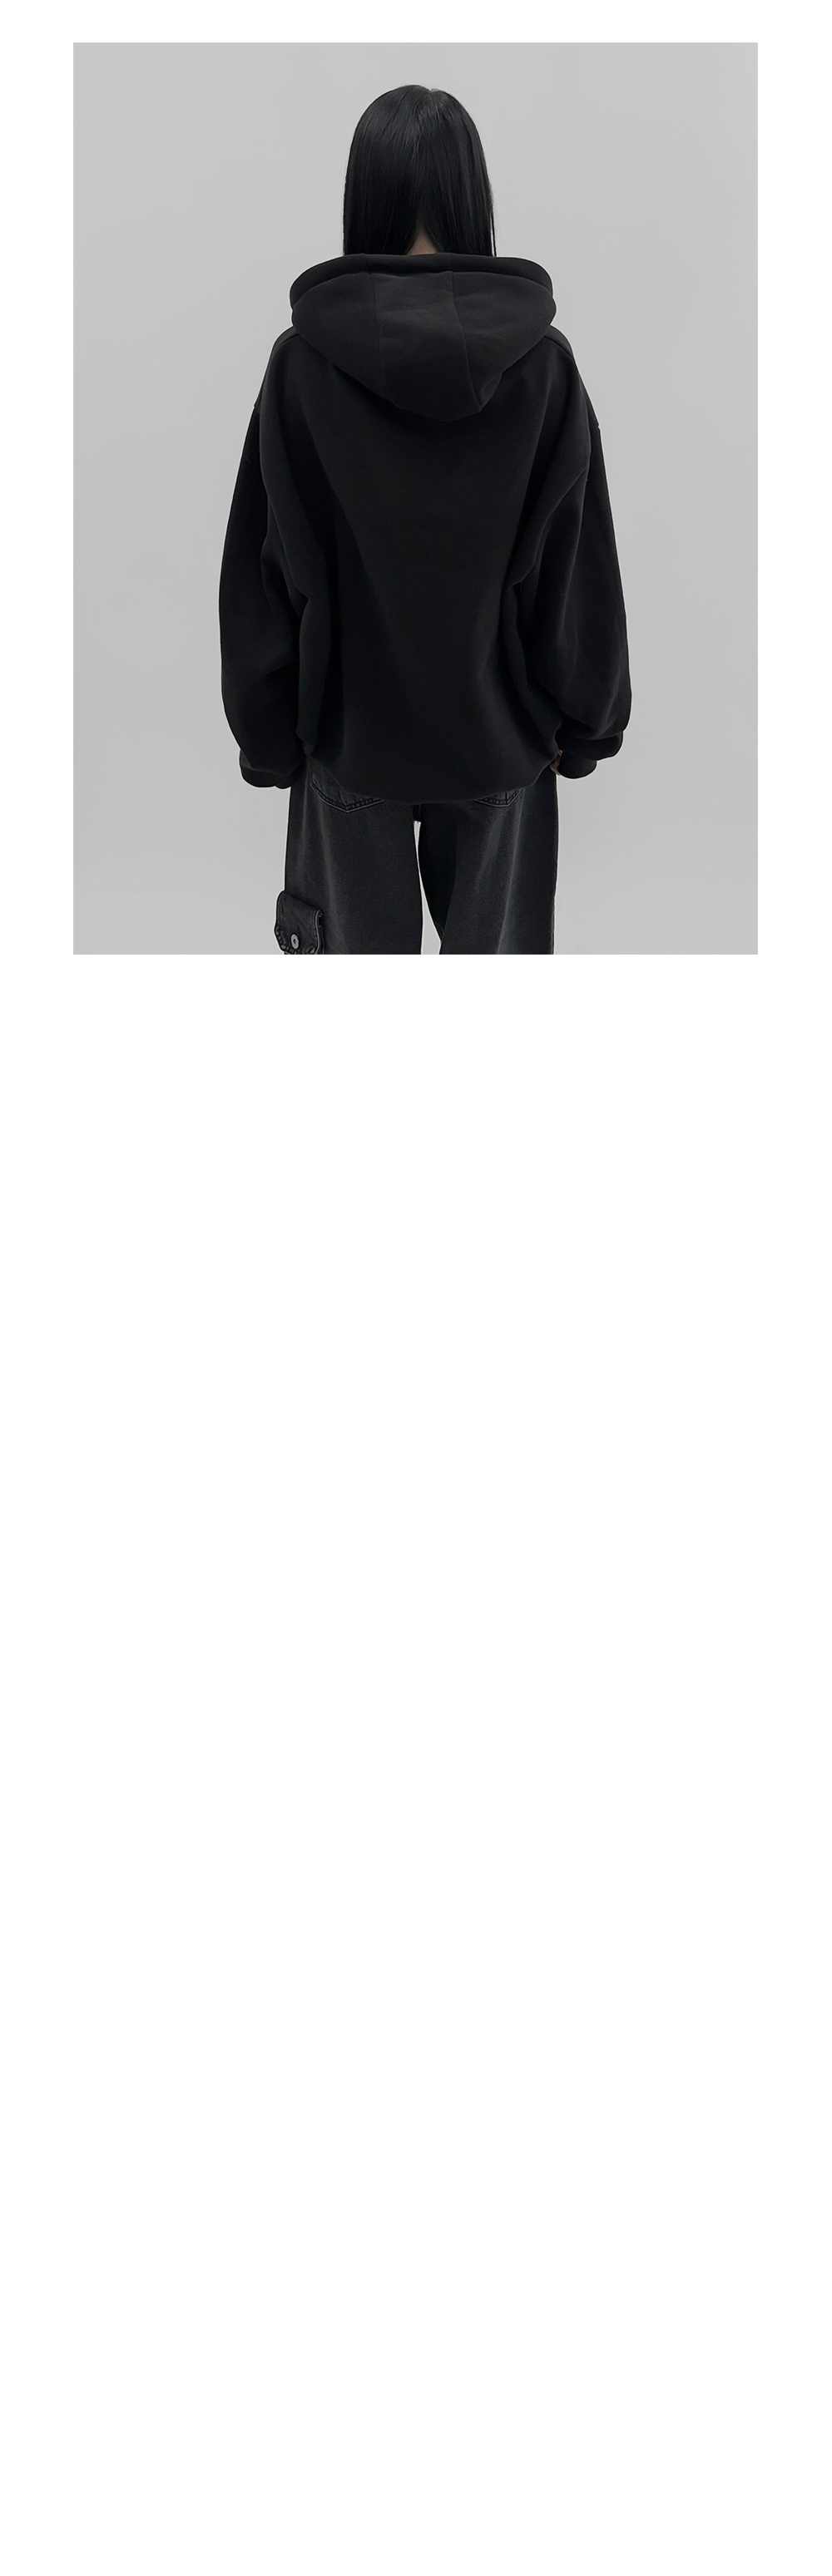 suspenders skirt/pants model image-S1L11